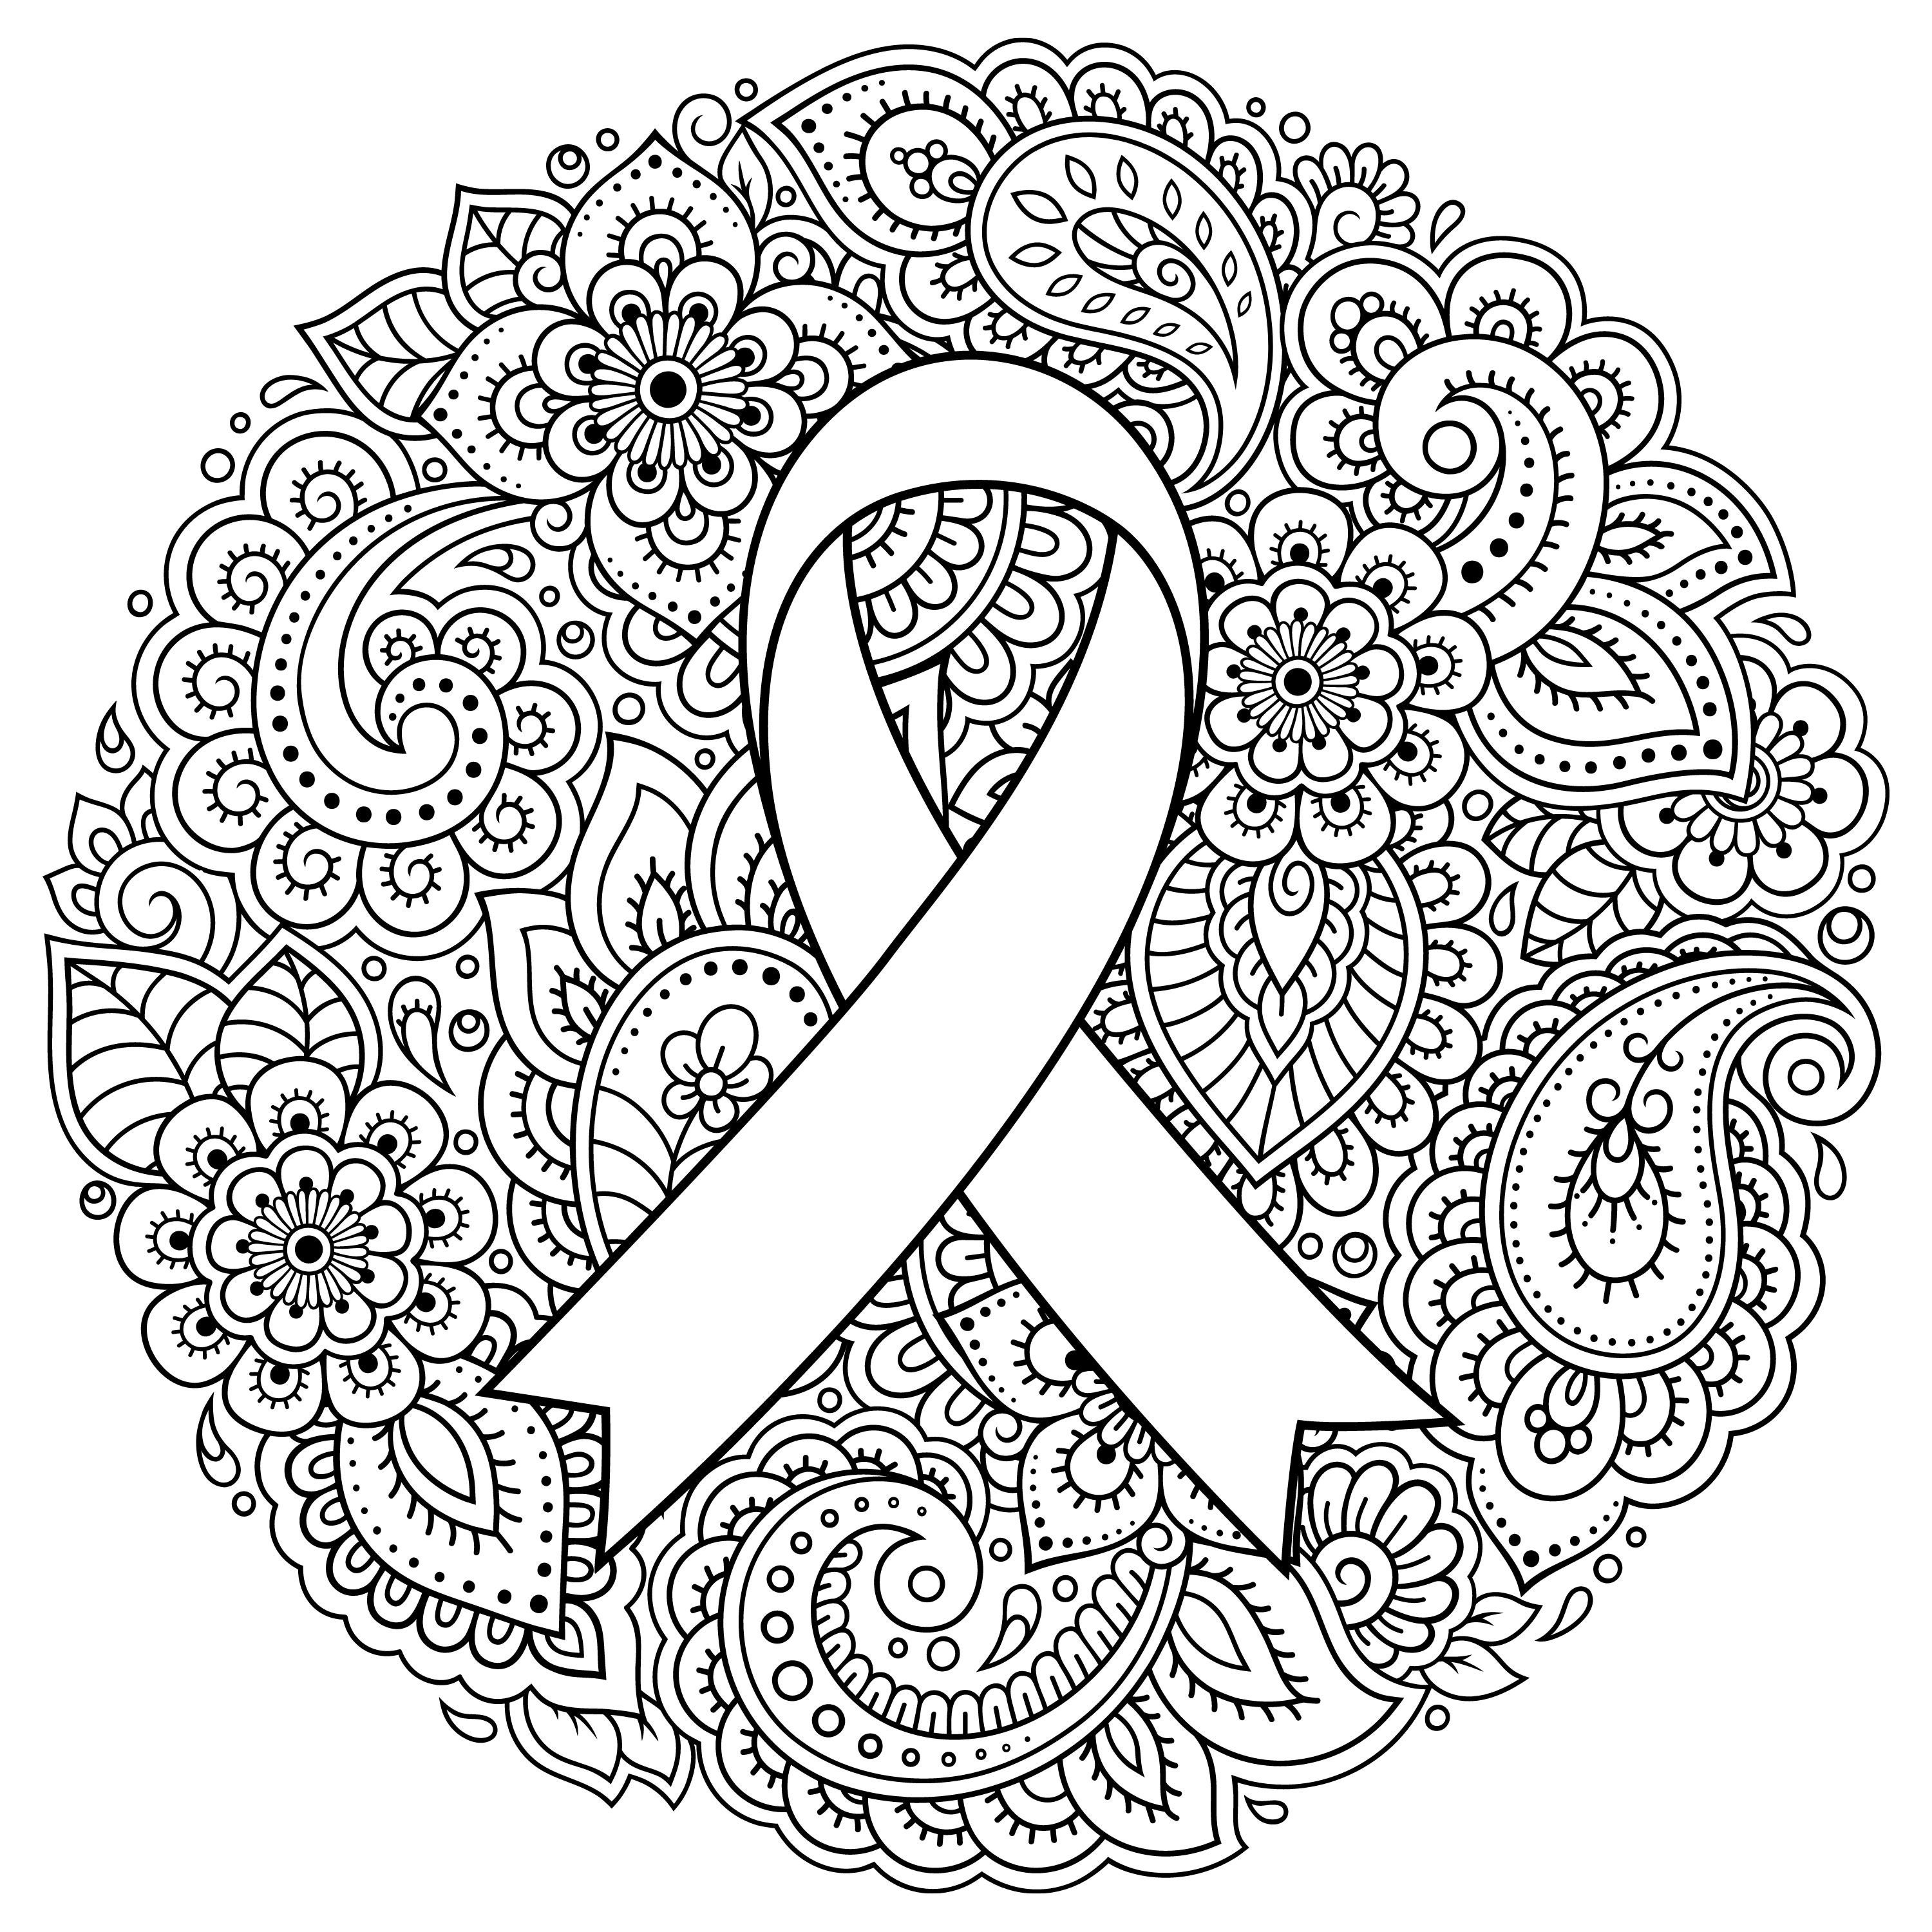 Awareness ribbon paisley coloring page digital coloring download now